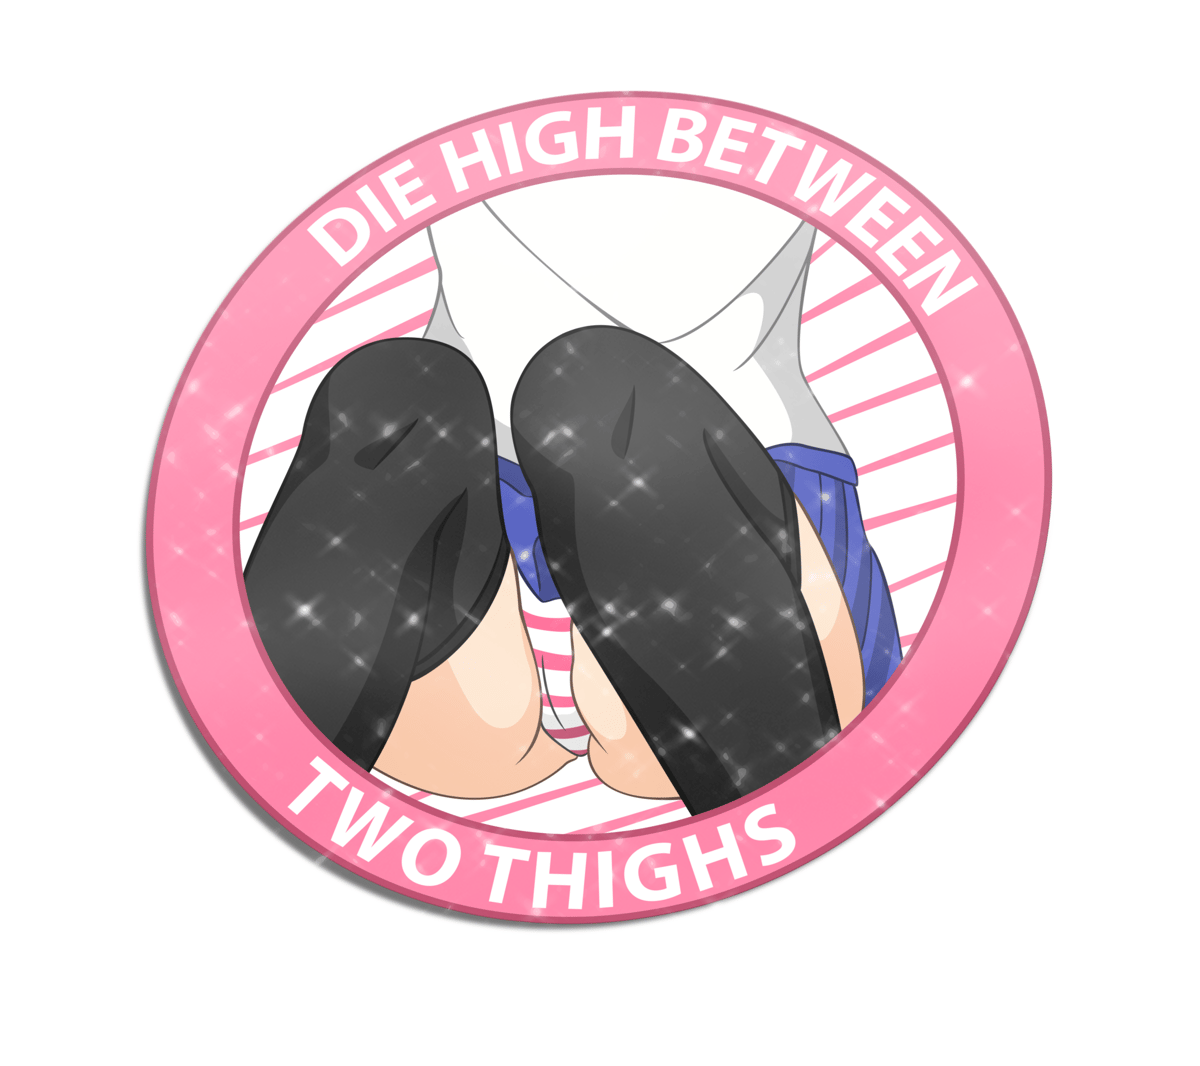 Image of Die high between two thighs